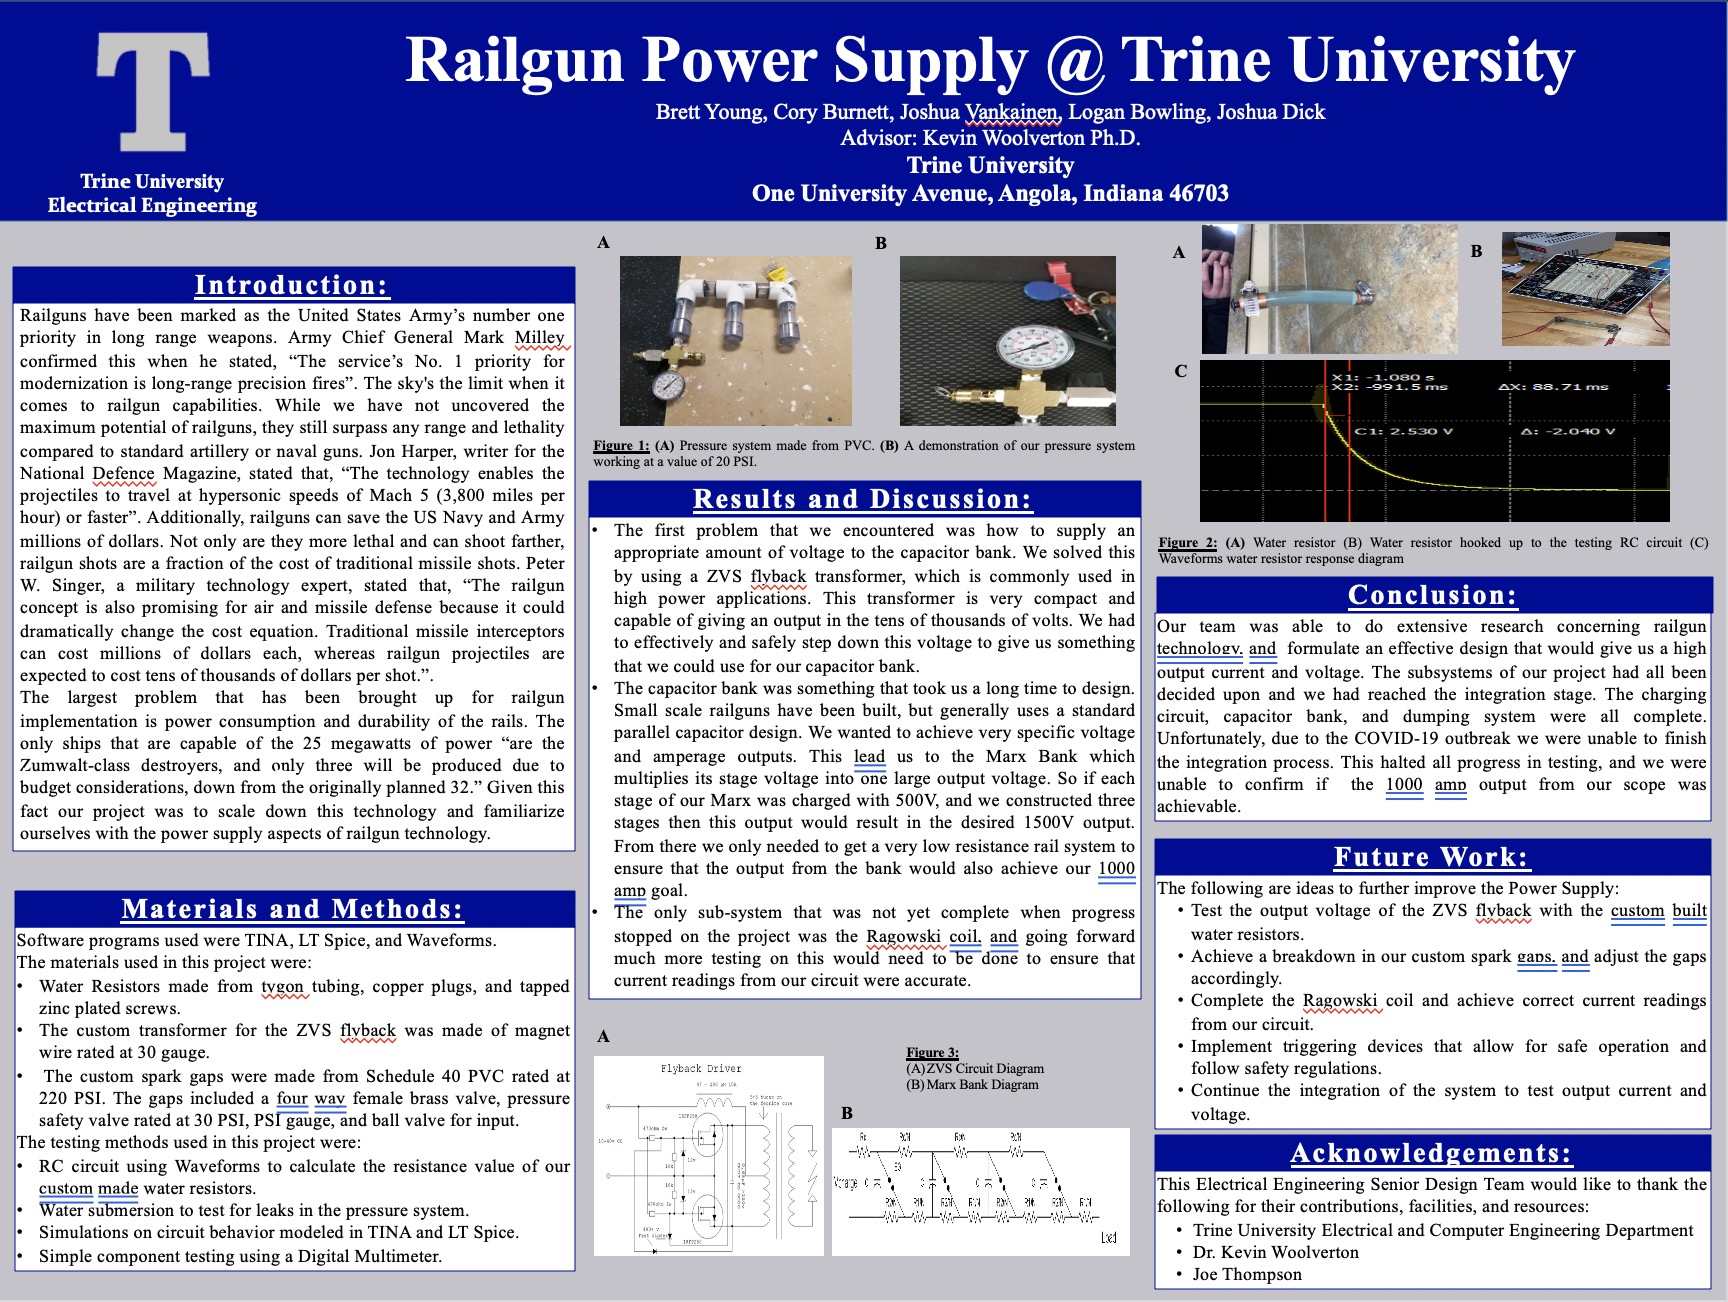 Railgun Power Supply Poster